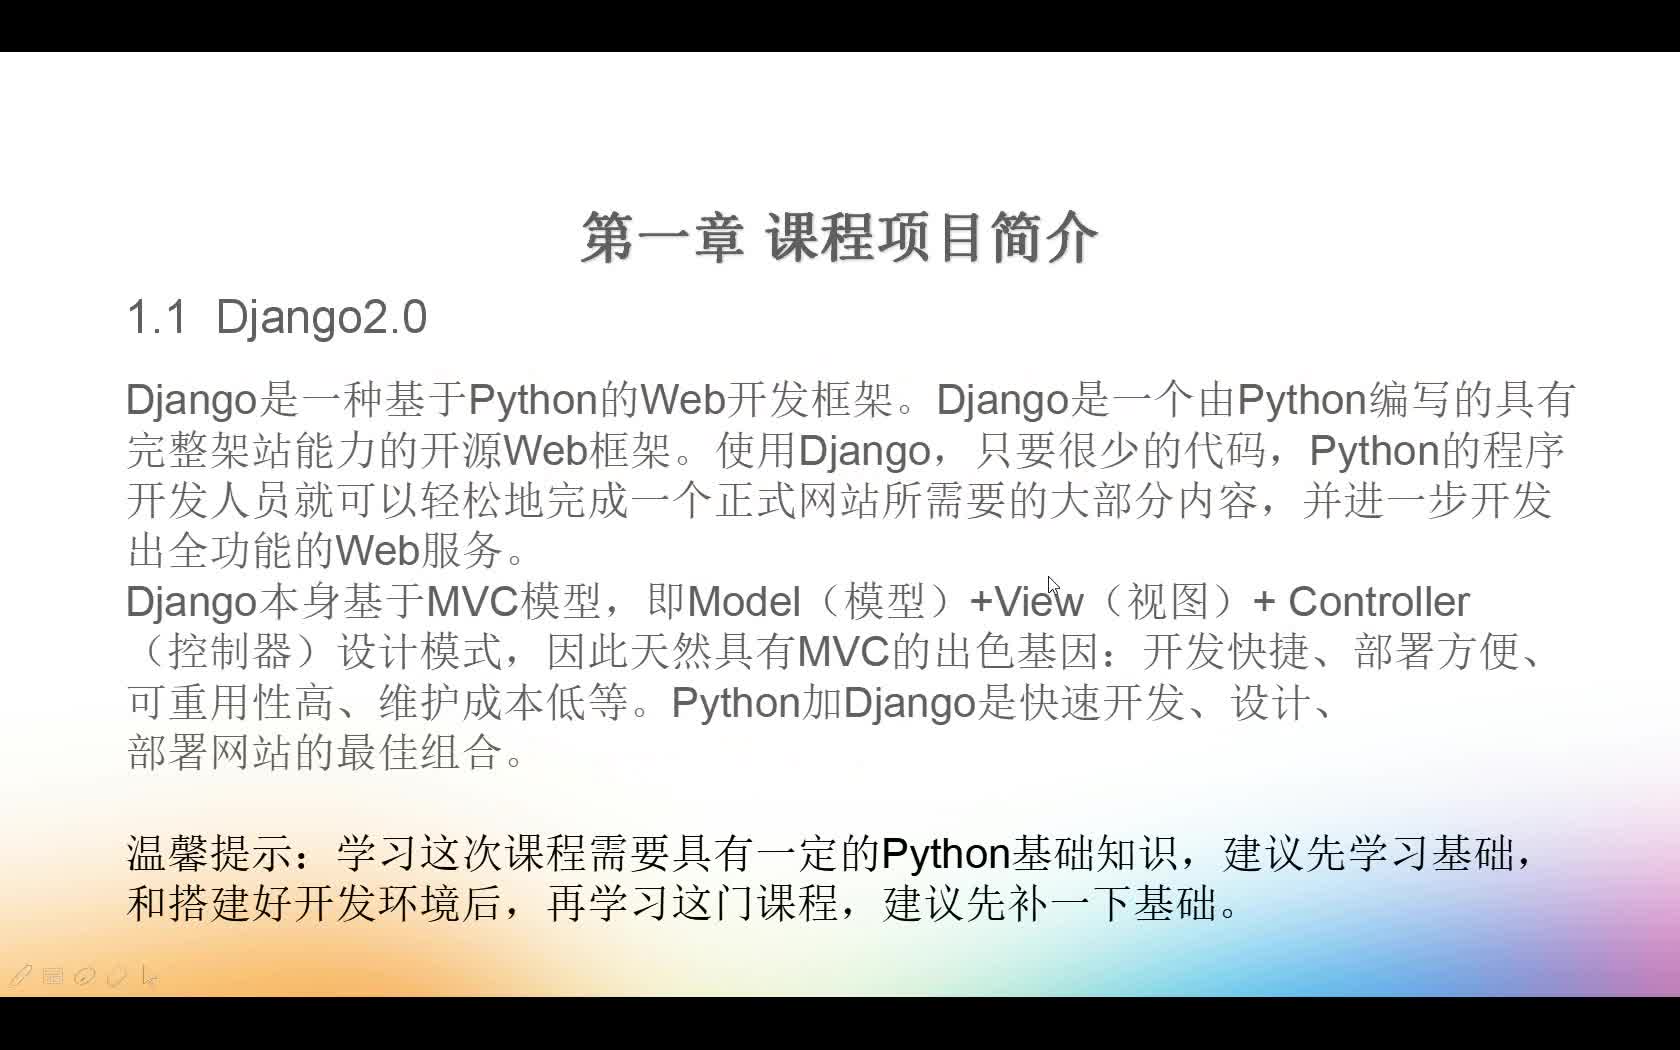 python3.6 Django2.0bootstarp mysql增删改查分页实战